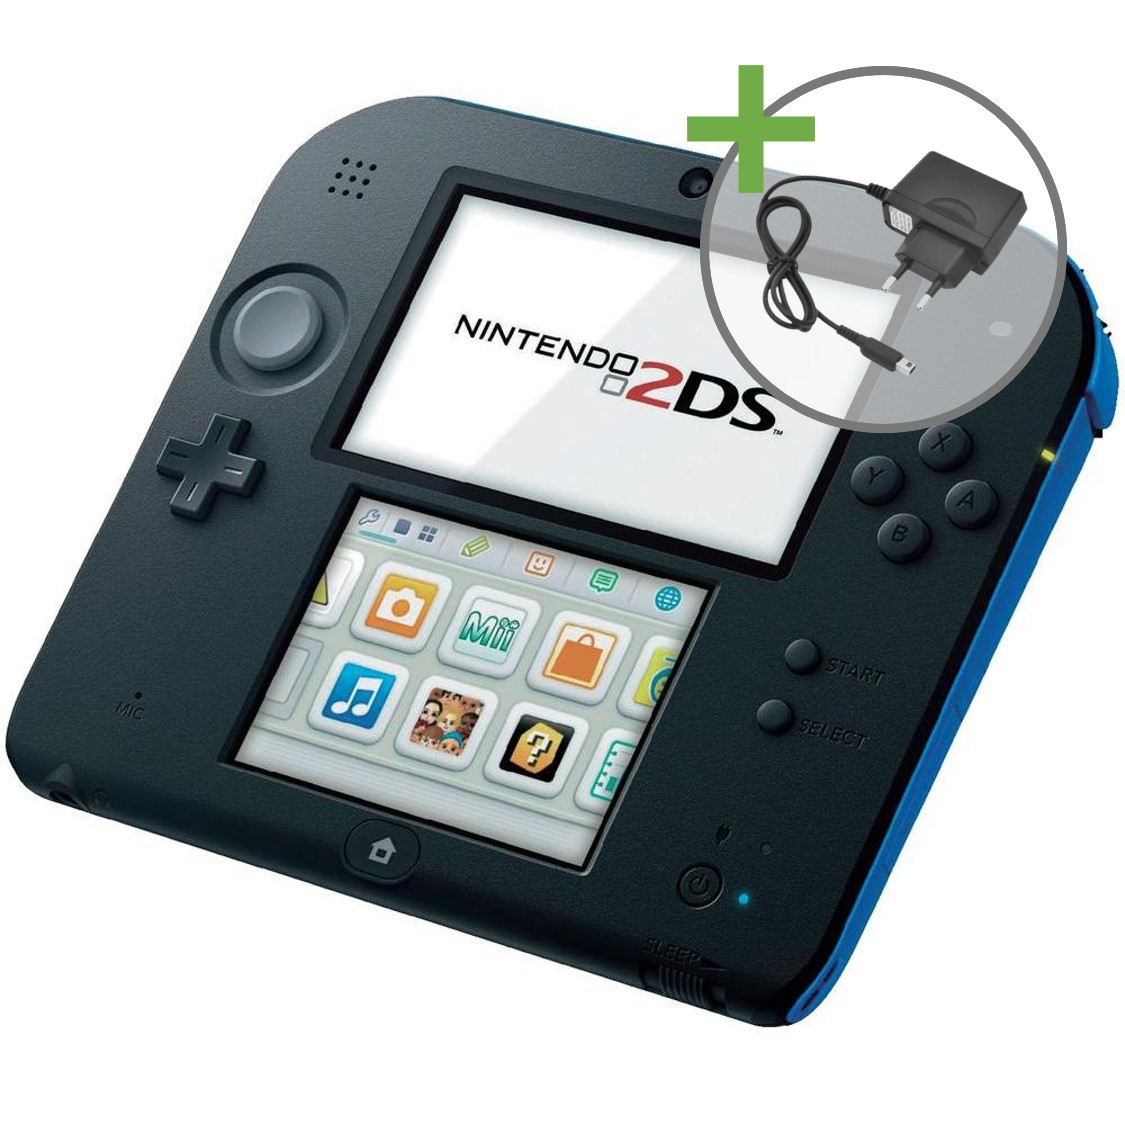 Nintendo 2DS - Black/Blue (Electric Blue) - Super Mario Bros 2 Edition [Complete] - Nintendo 3DS Hardware - 2